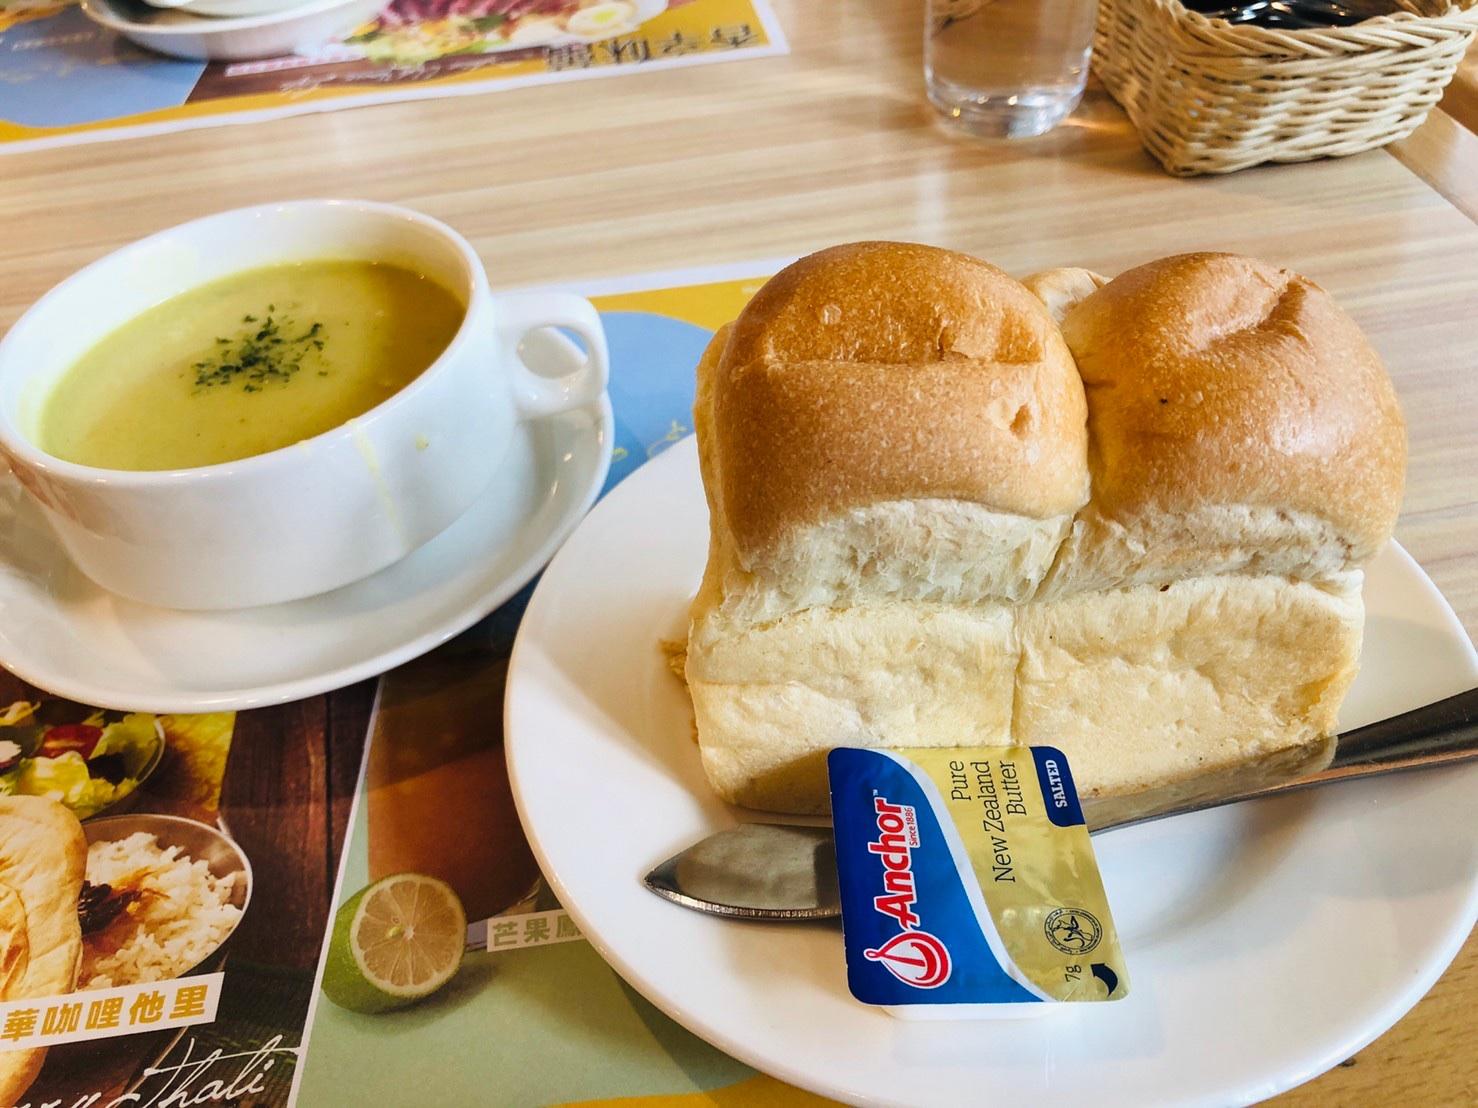 Royal Host 樂雅樂家庭餐廳 - 內湖店，好吃的麵包跟濃湯